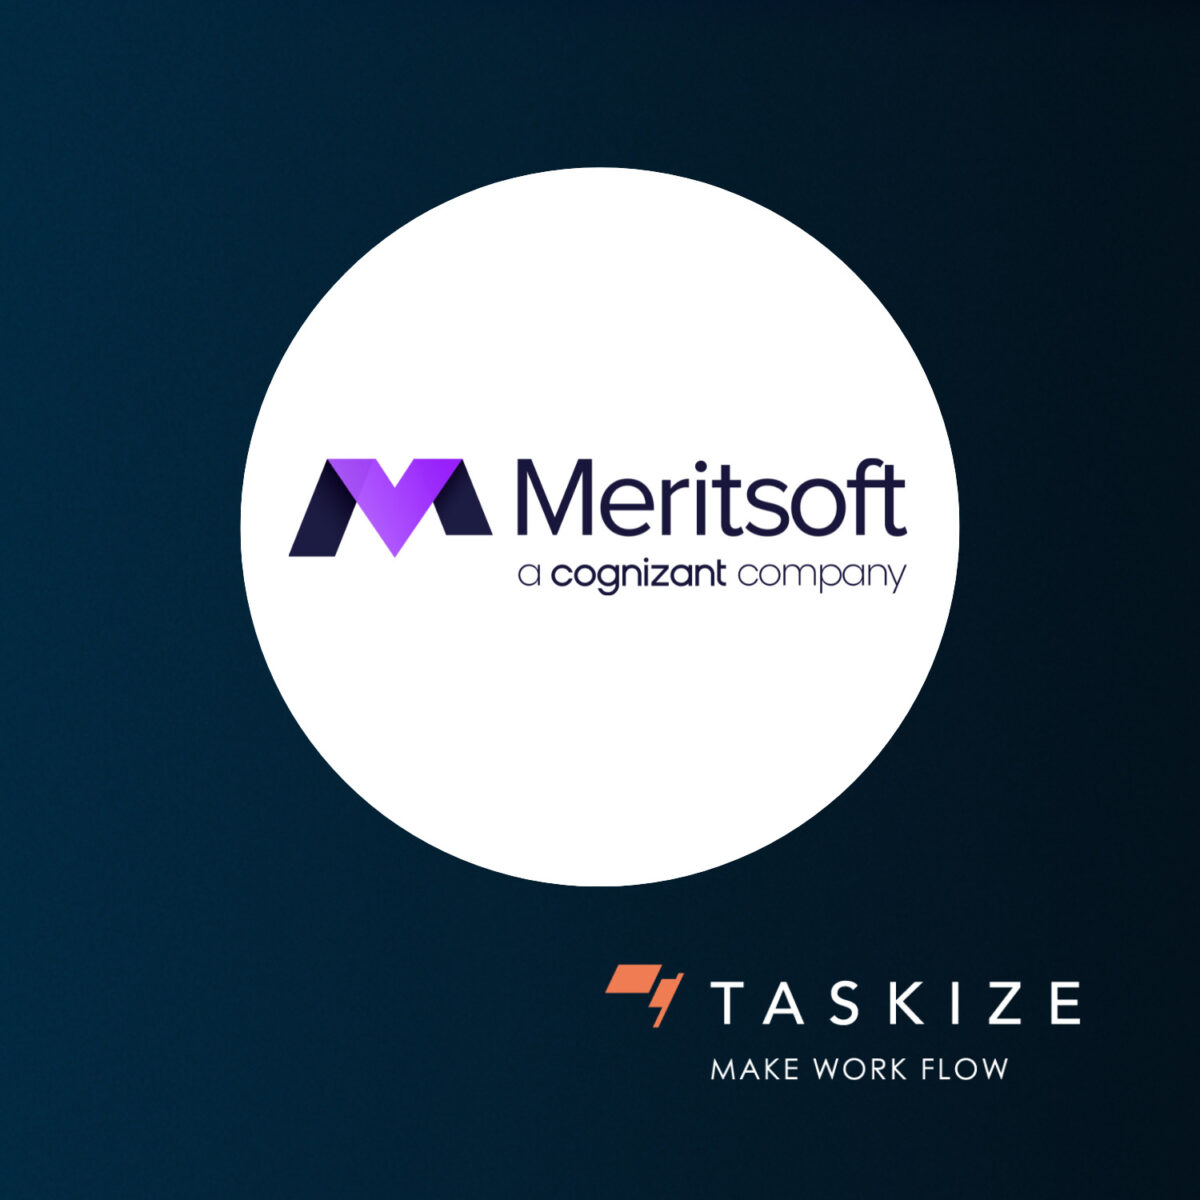 Meritsoft press release